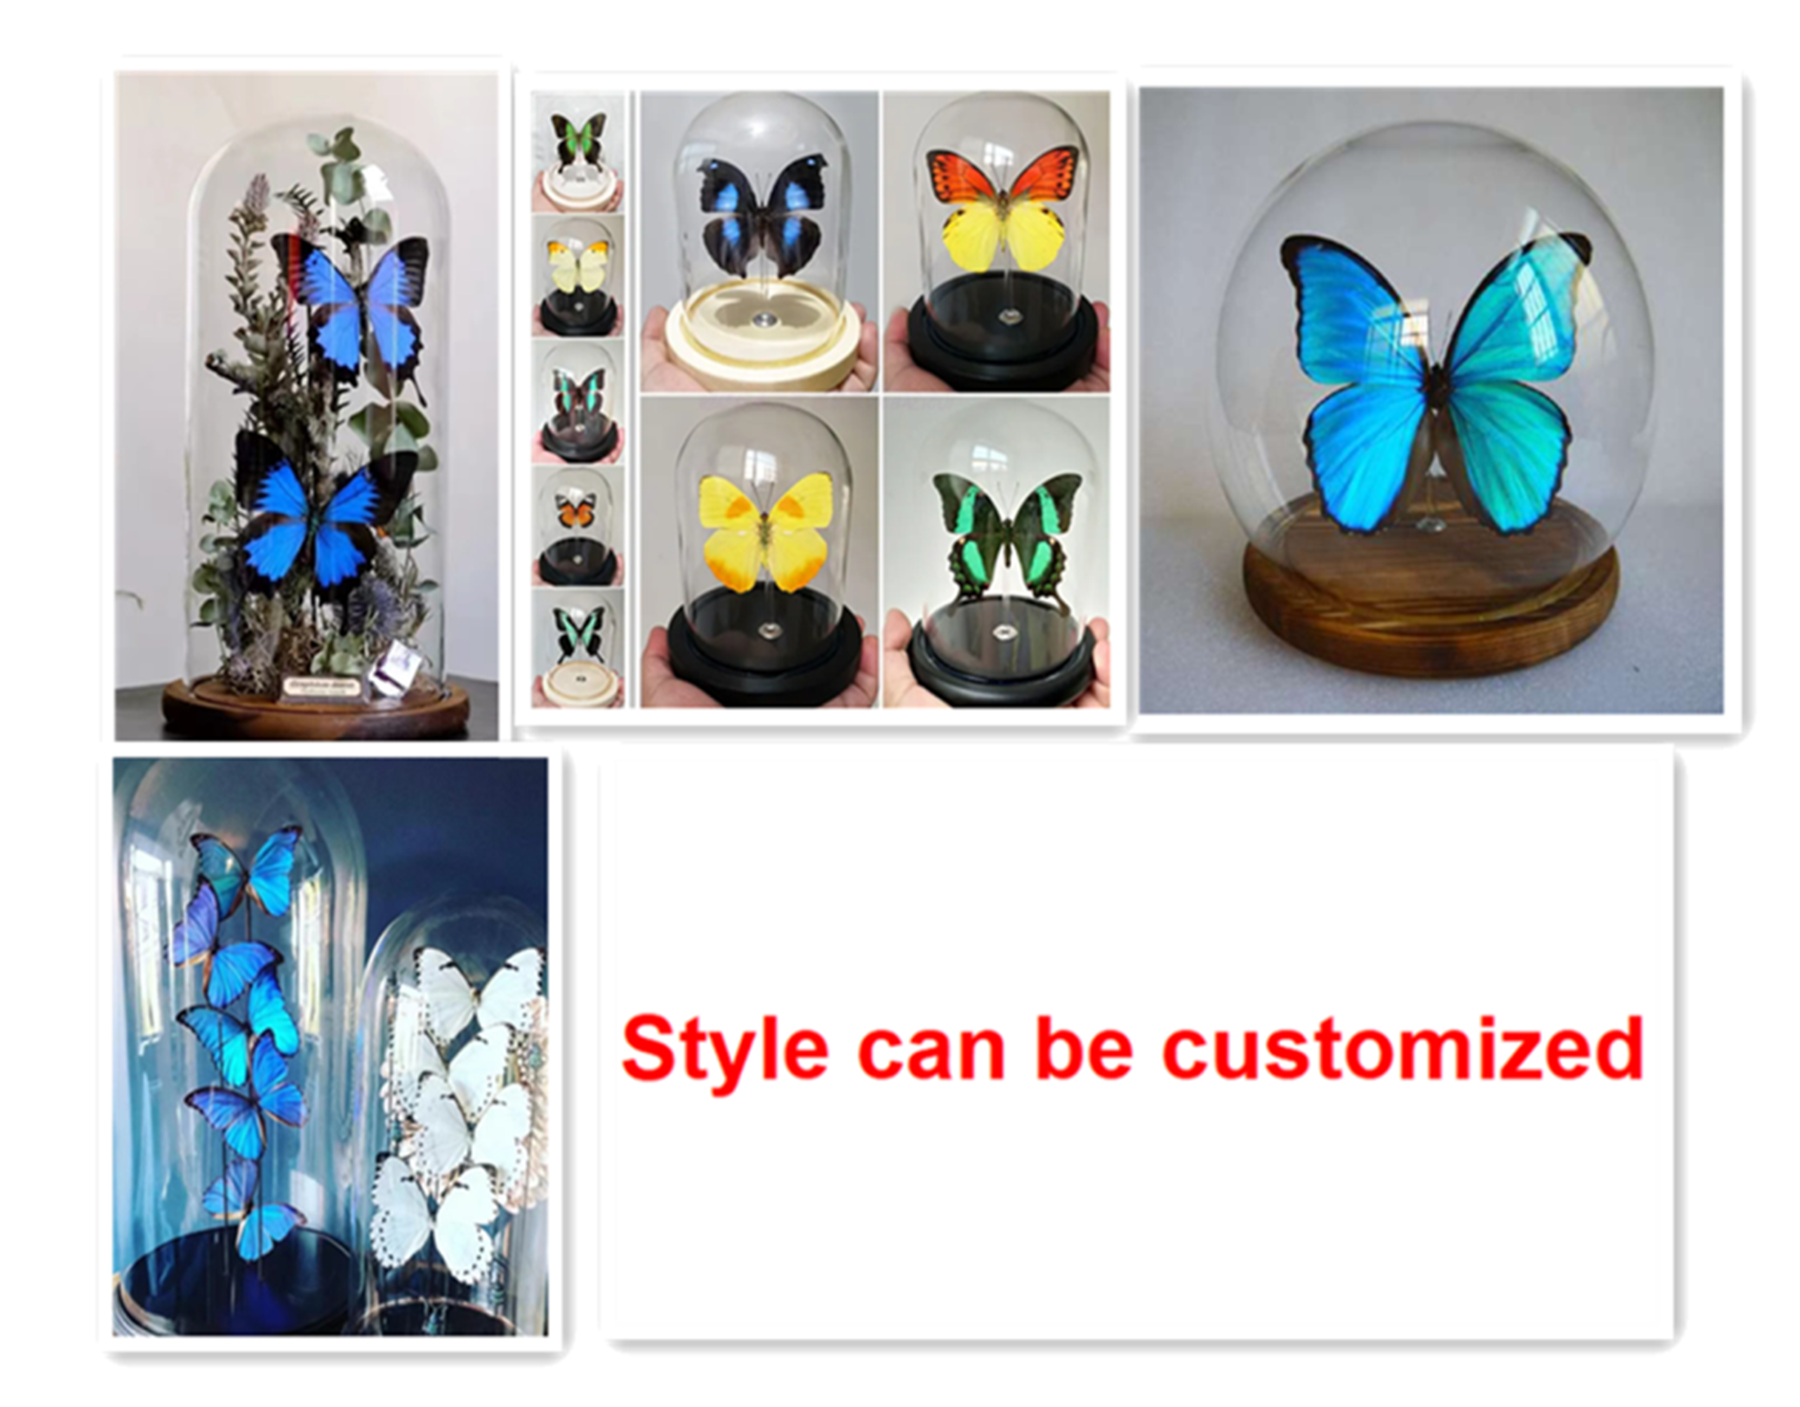 Euploea Core & Common Crow Butterfly Suppliers & Wholesalers - CF Butterfly